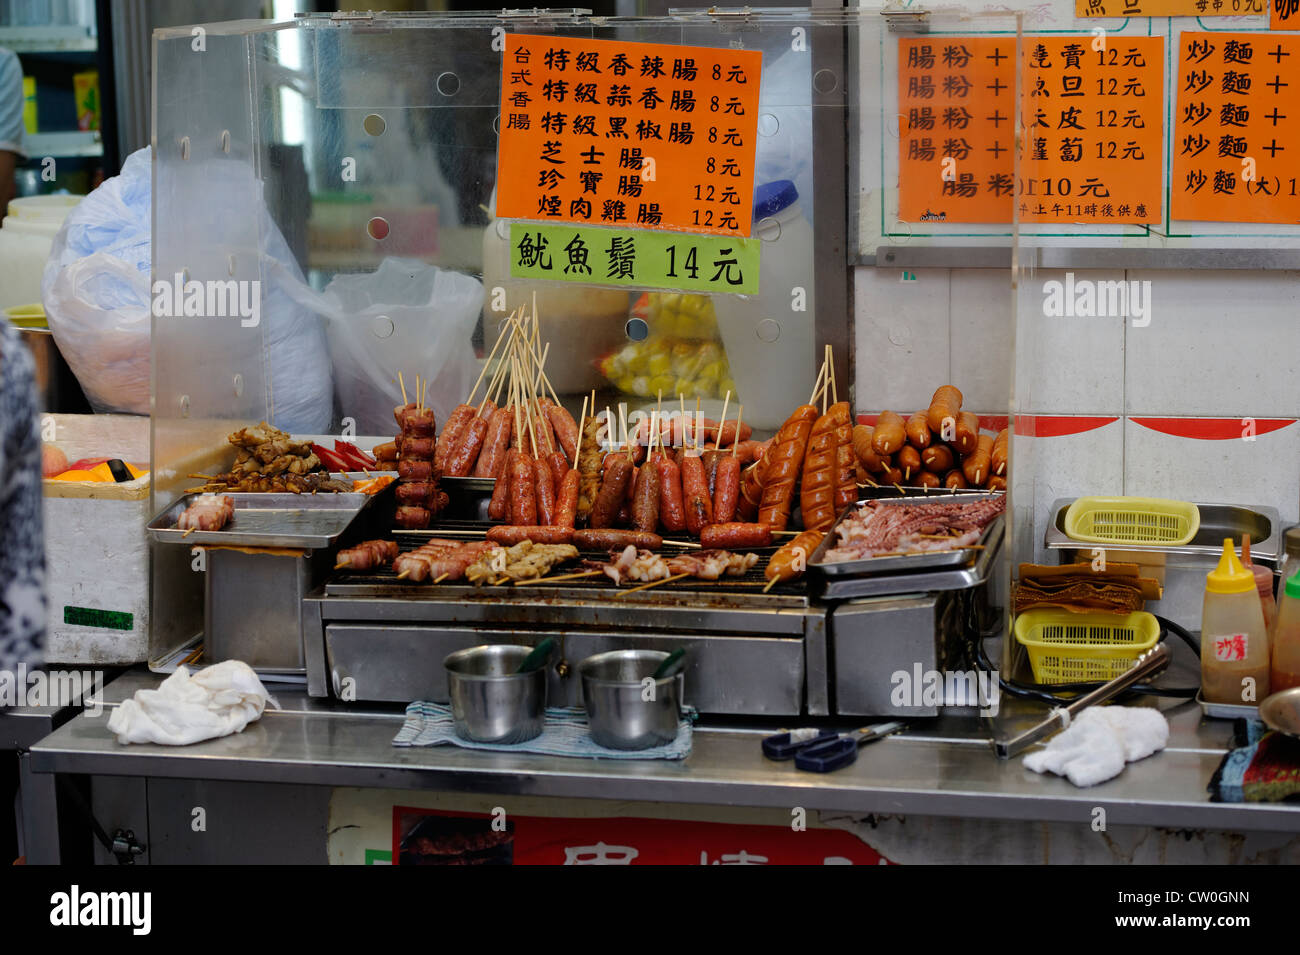 Hawker puesto de venta de comida rápida china de Wan Chai, Hong Kong Foto de stock